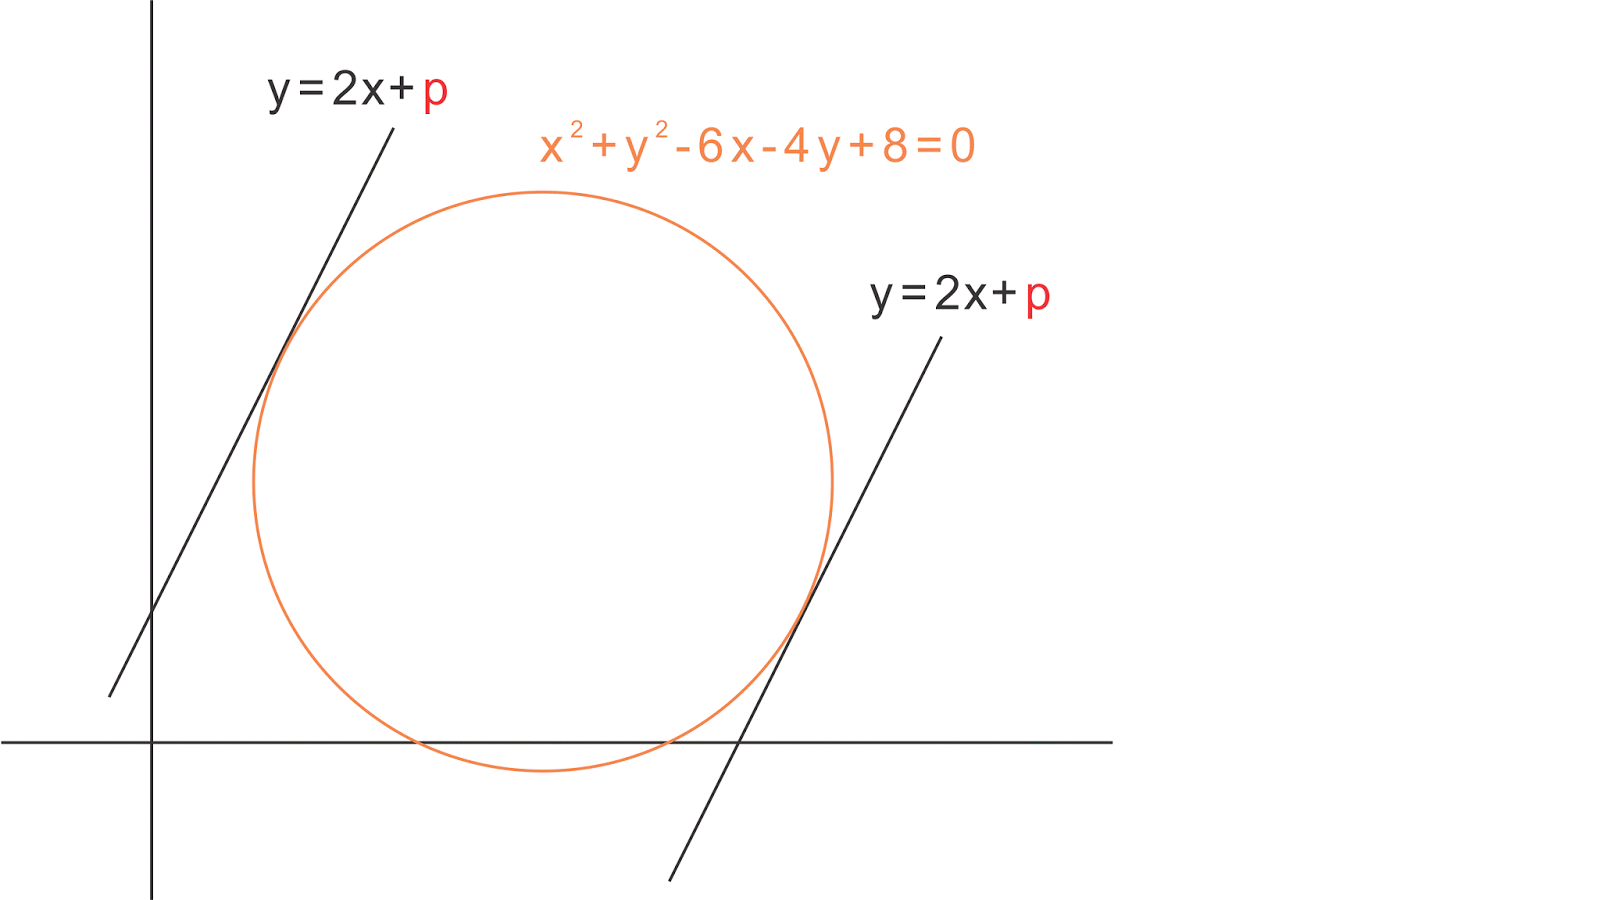 persamaan lingkaran menyinggung sumbu x